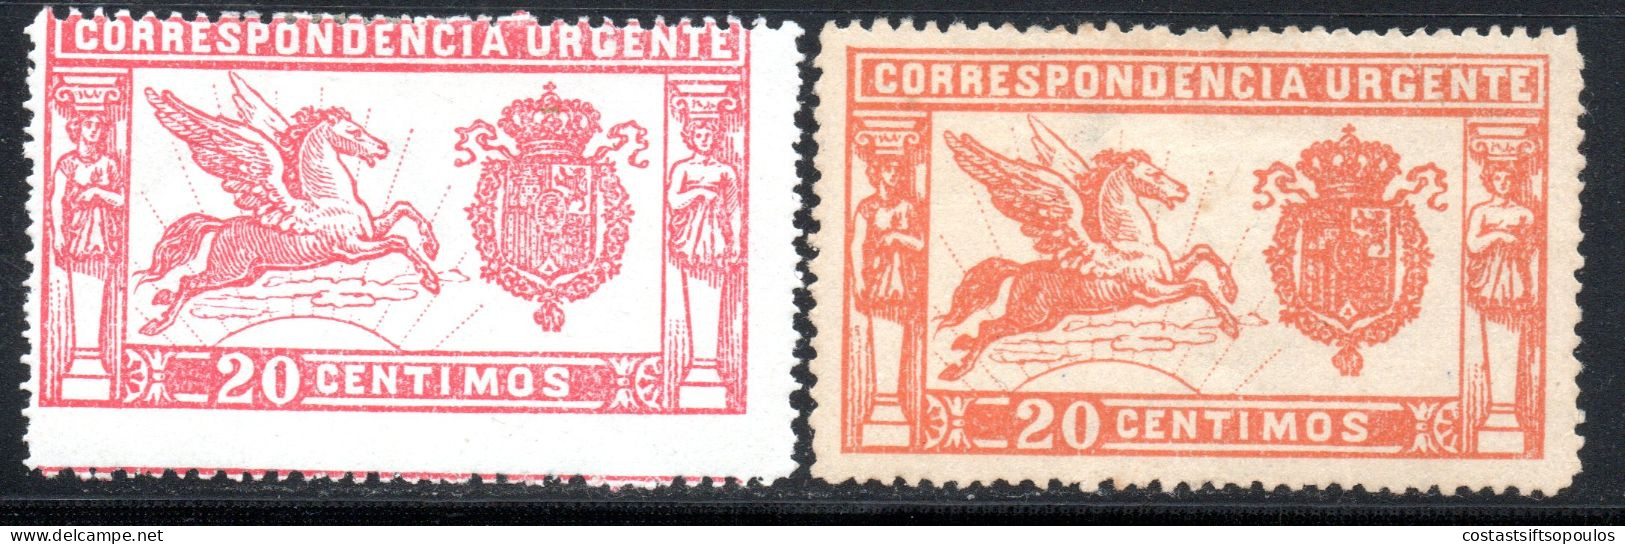 2155. SPAIN 1905-1925 SPECIAL DELIVERY #1 PEGASUS X 2, SHADES, MH. - Correo Urgente